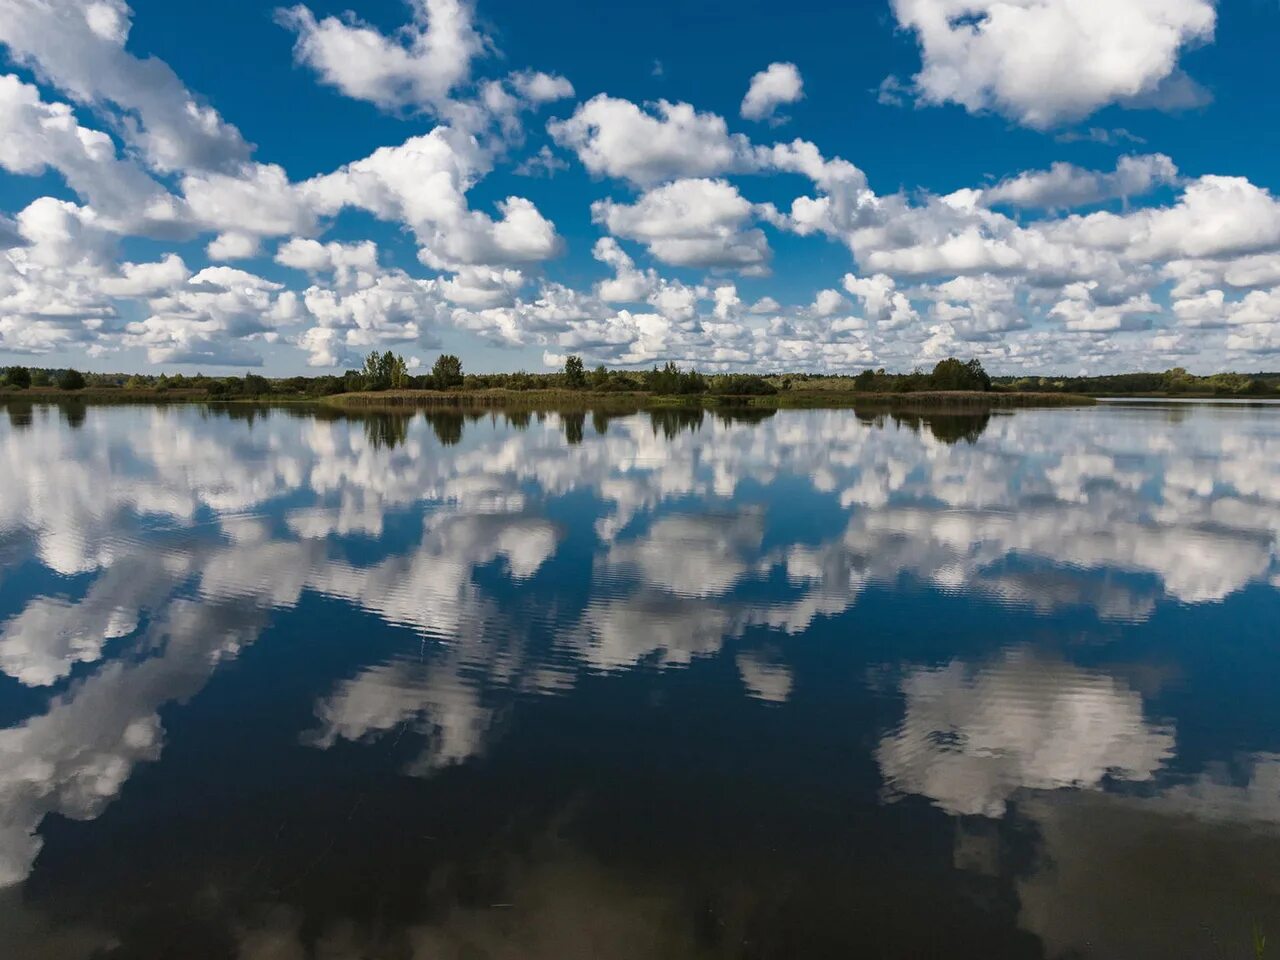 Отражение неба в воде. Отражение облаков в воде. Облака в реке. Озеро небо.